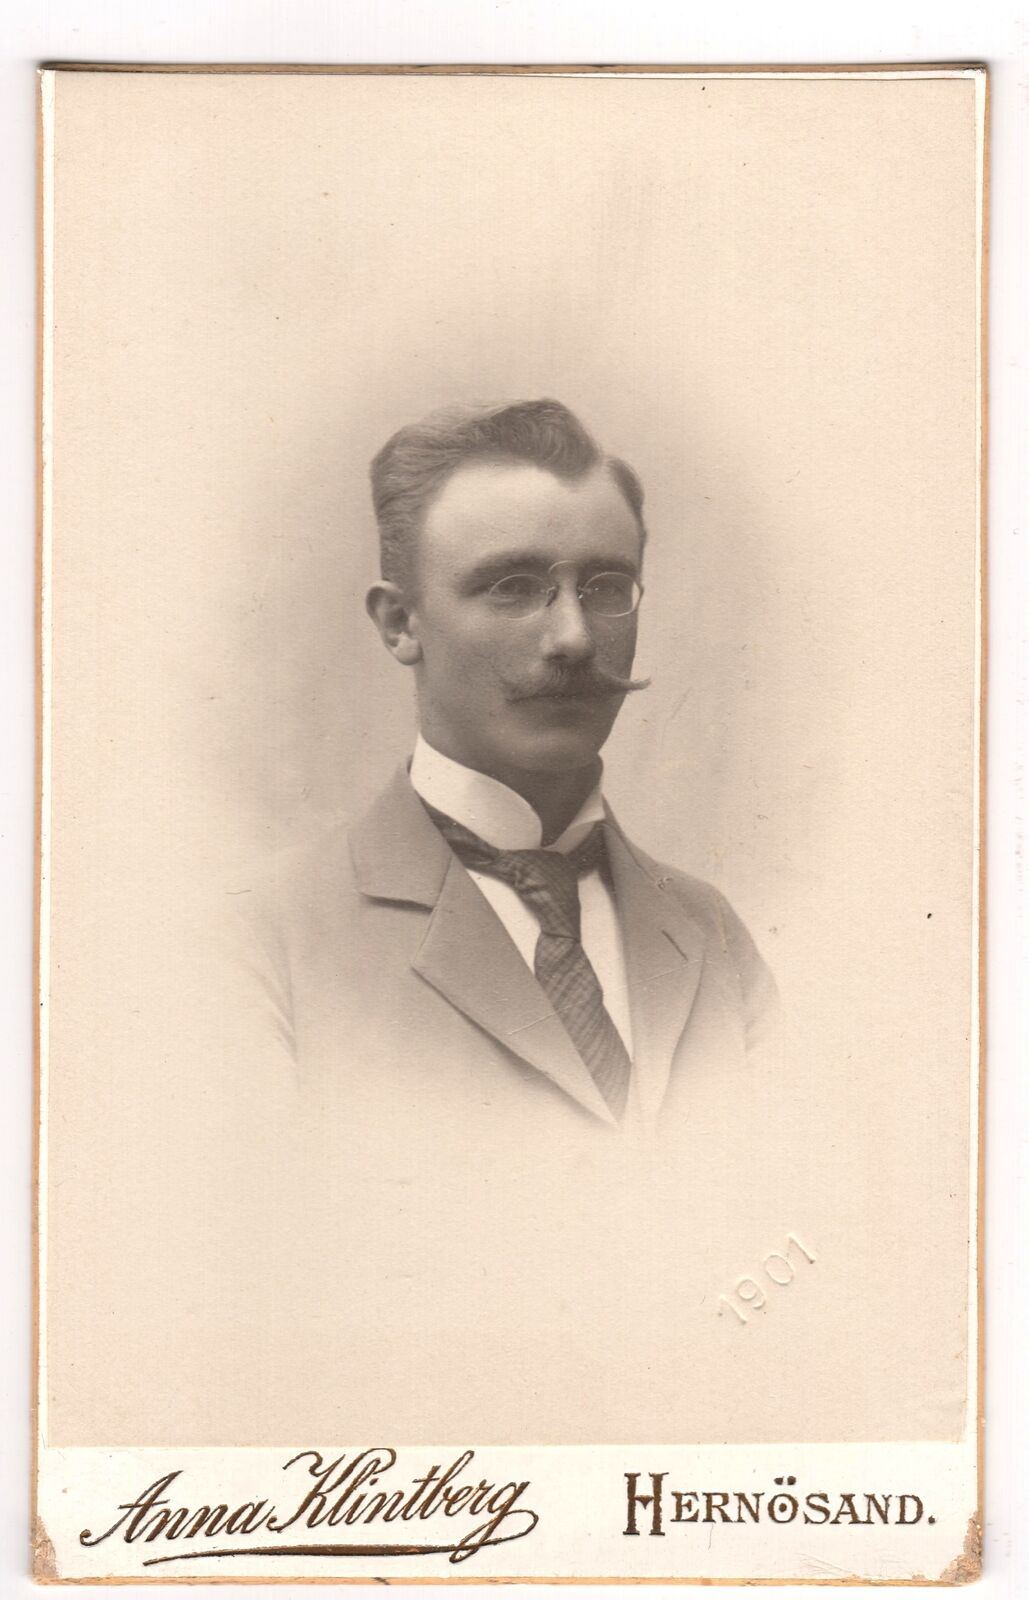 Antique Carte De Visite - Sweden -Anna Klintberg - Man Mustache -Photograph Card - Dahlströms Fine Art